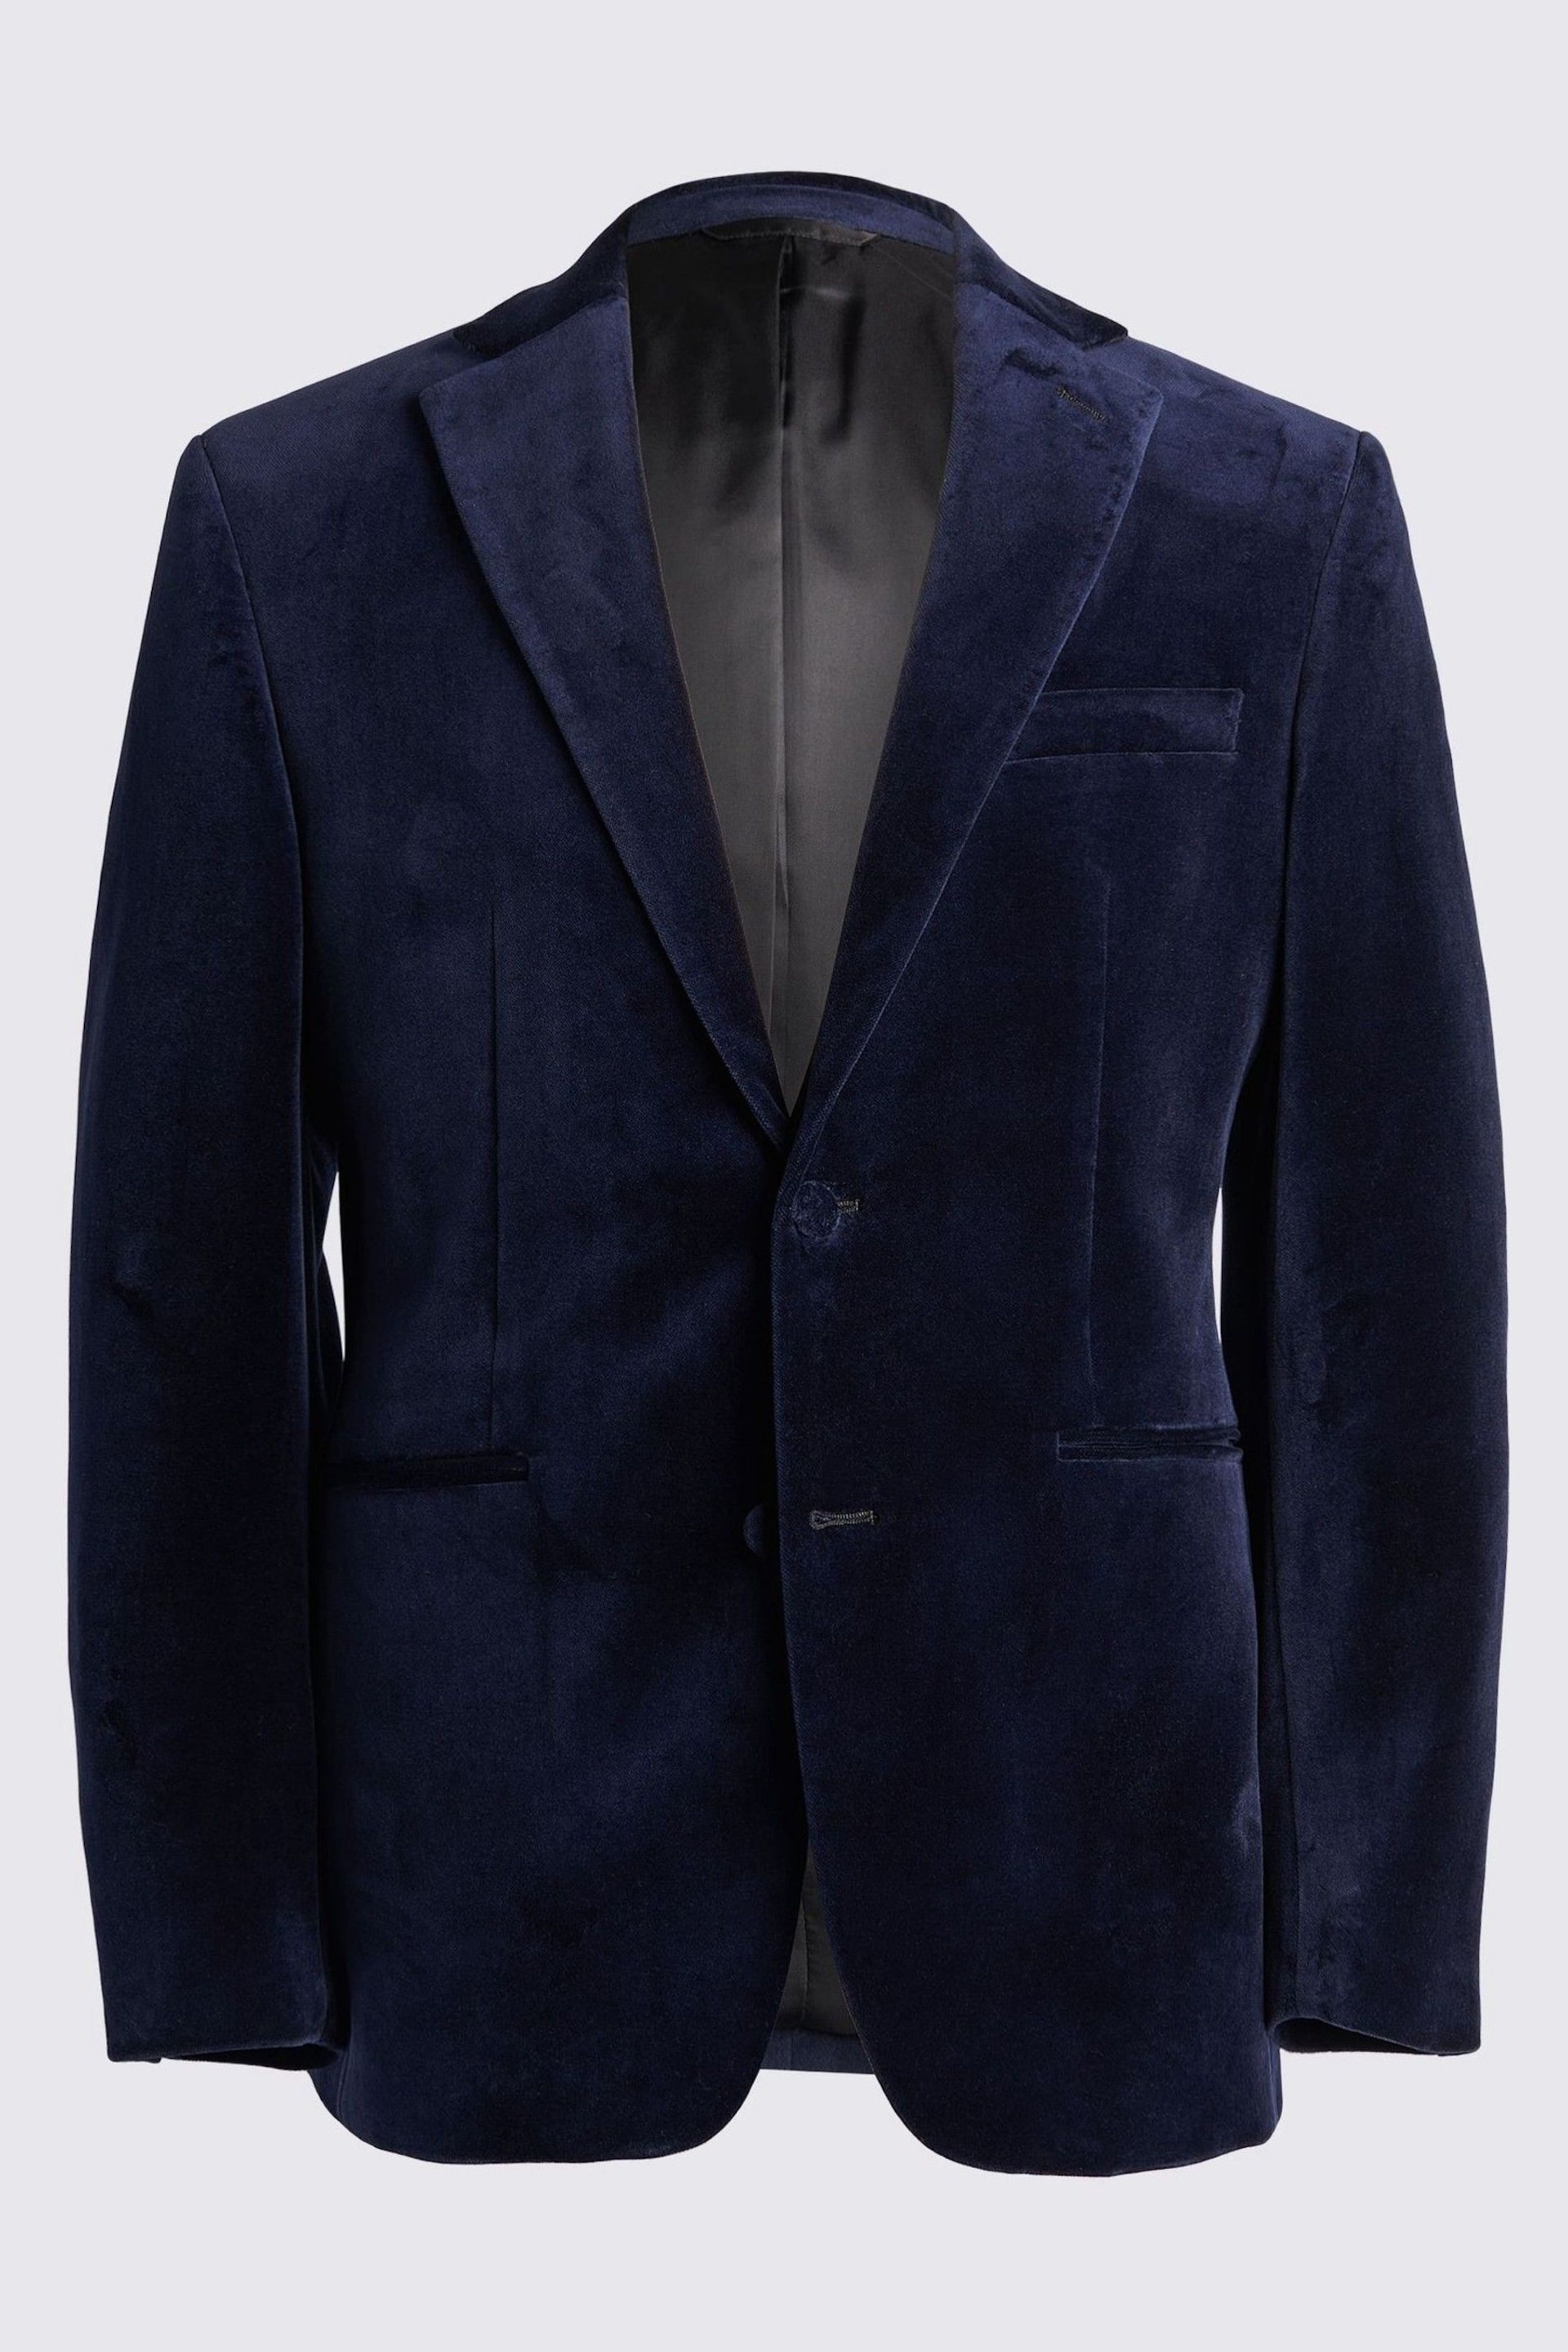 MOSS Blue Tailored Fit Velvet Jacket - Image 5 of 5